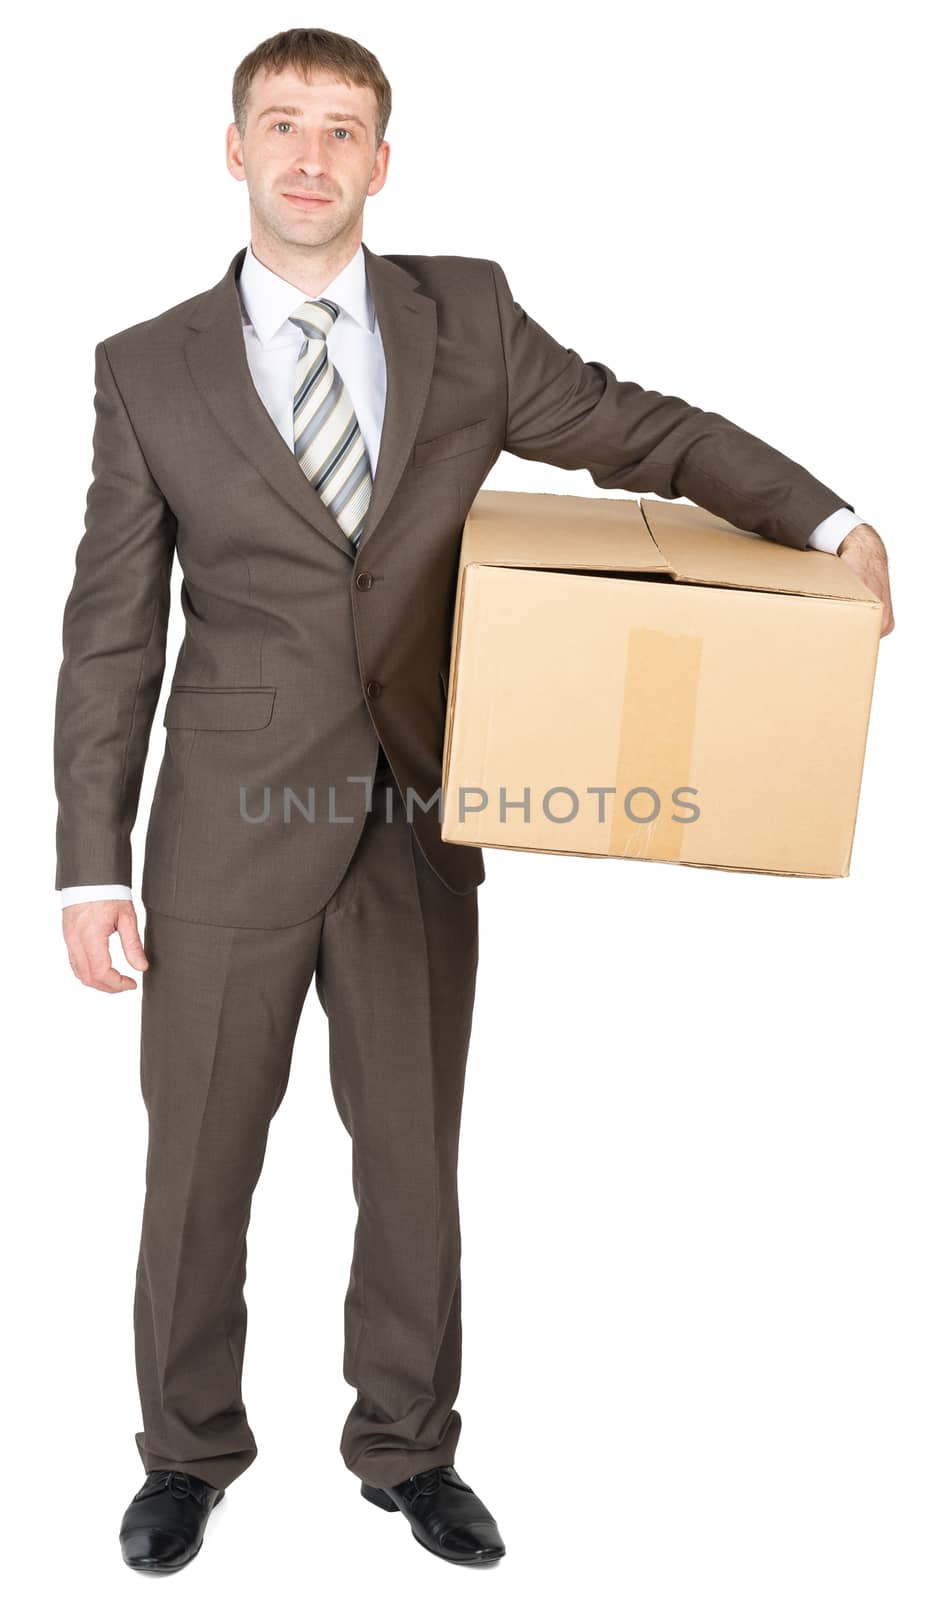 Deliveryman keeps parcel by cherezoff